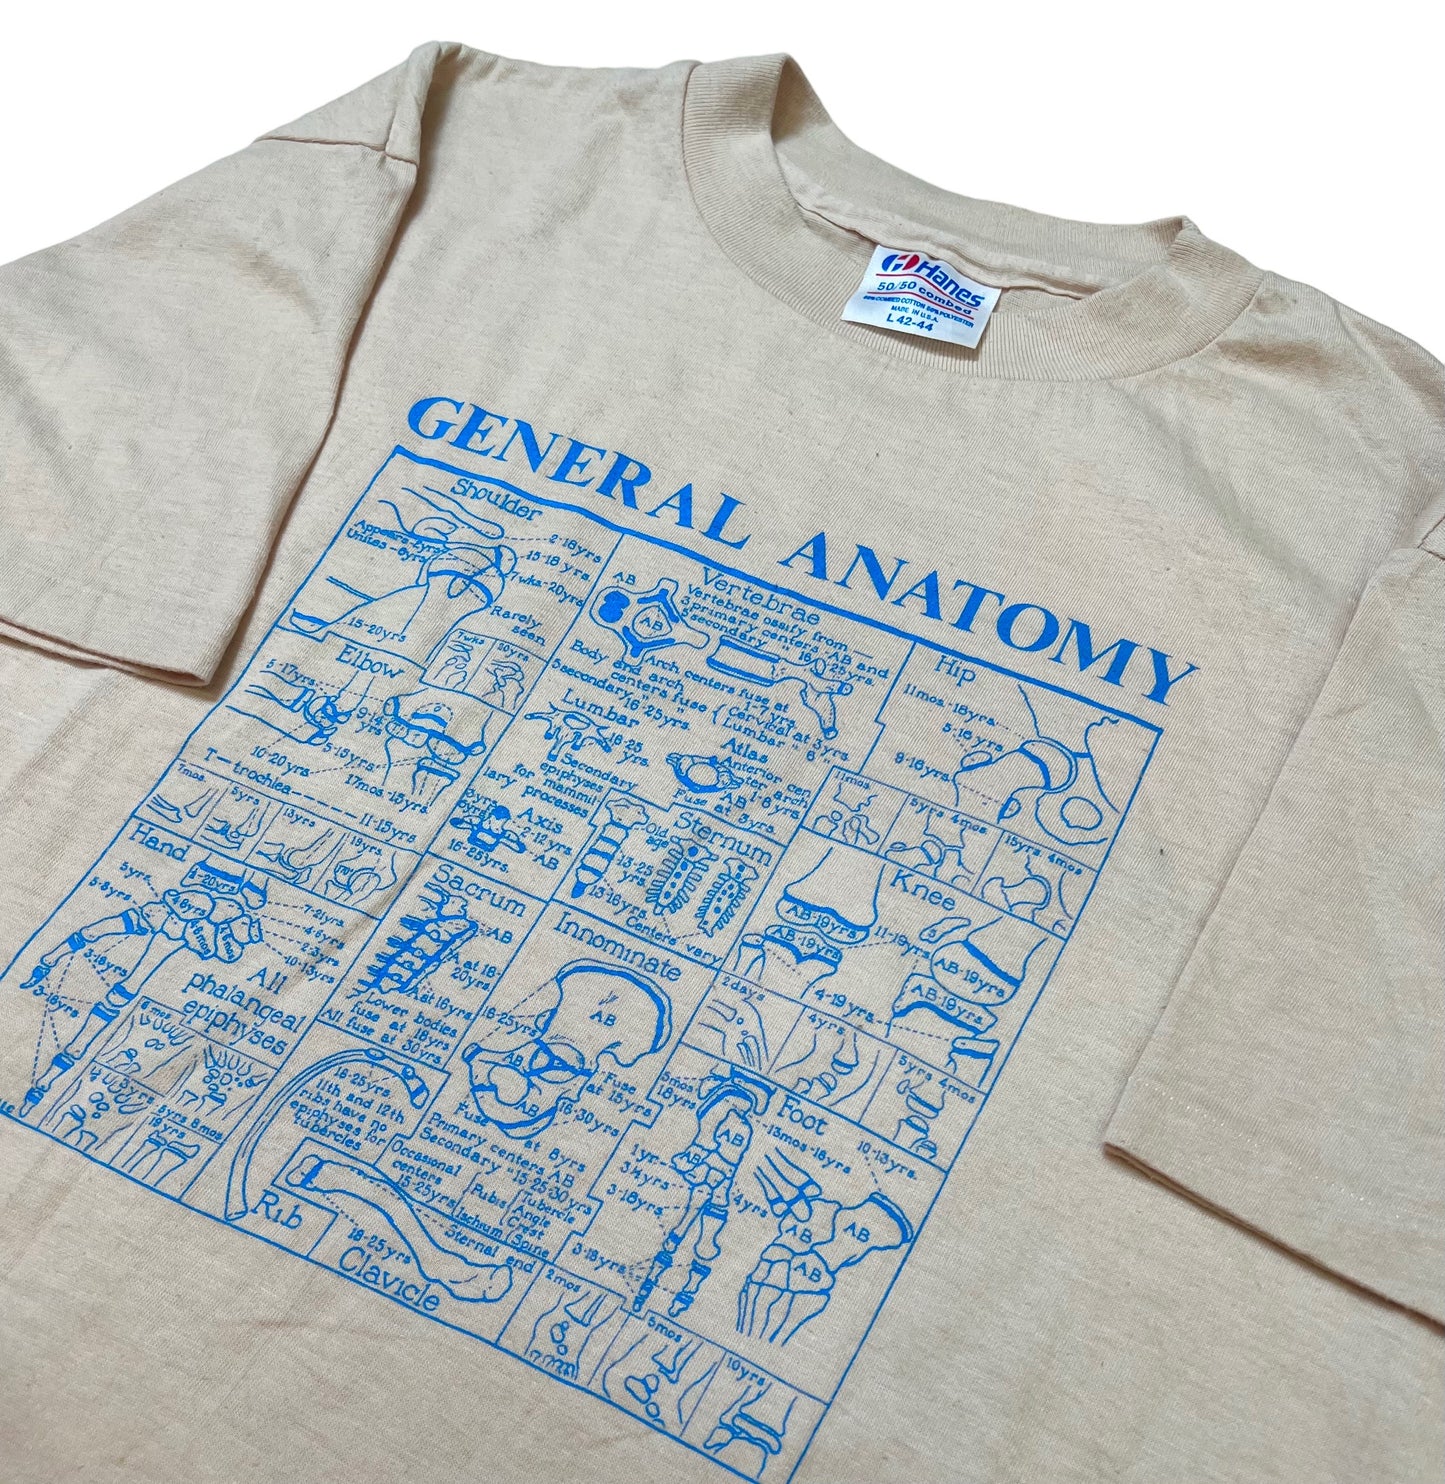 1980s General Anatomy Hanes t-shirt